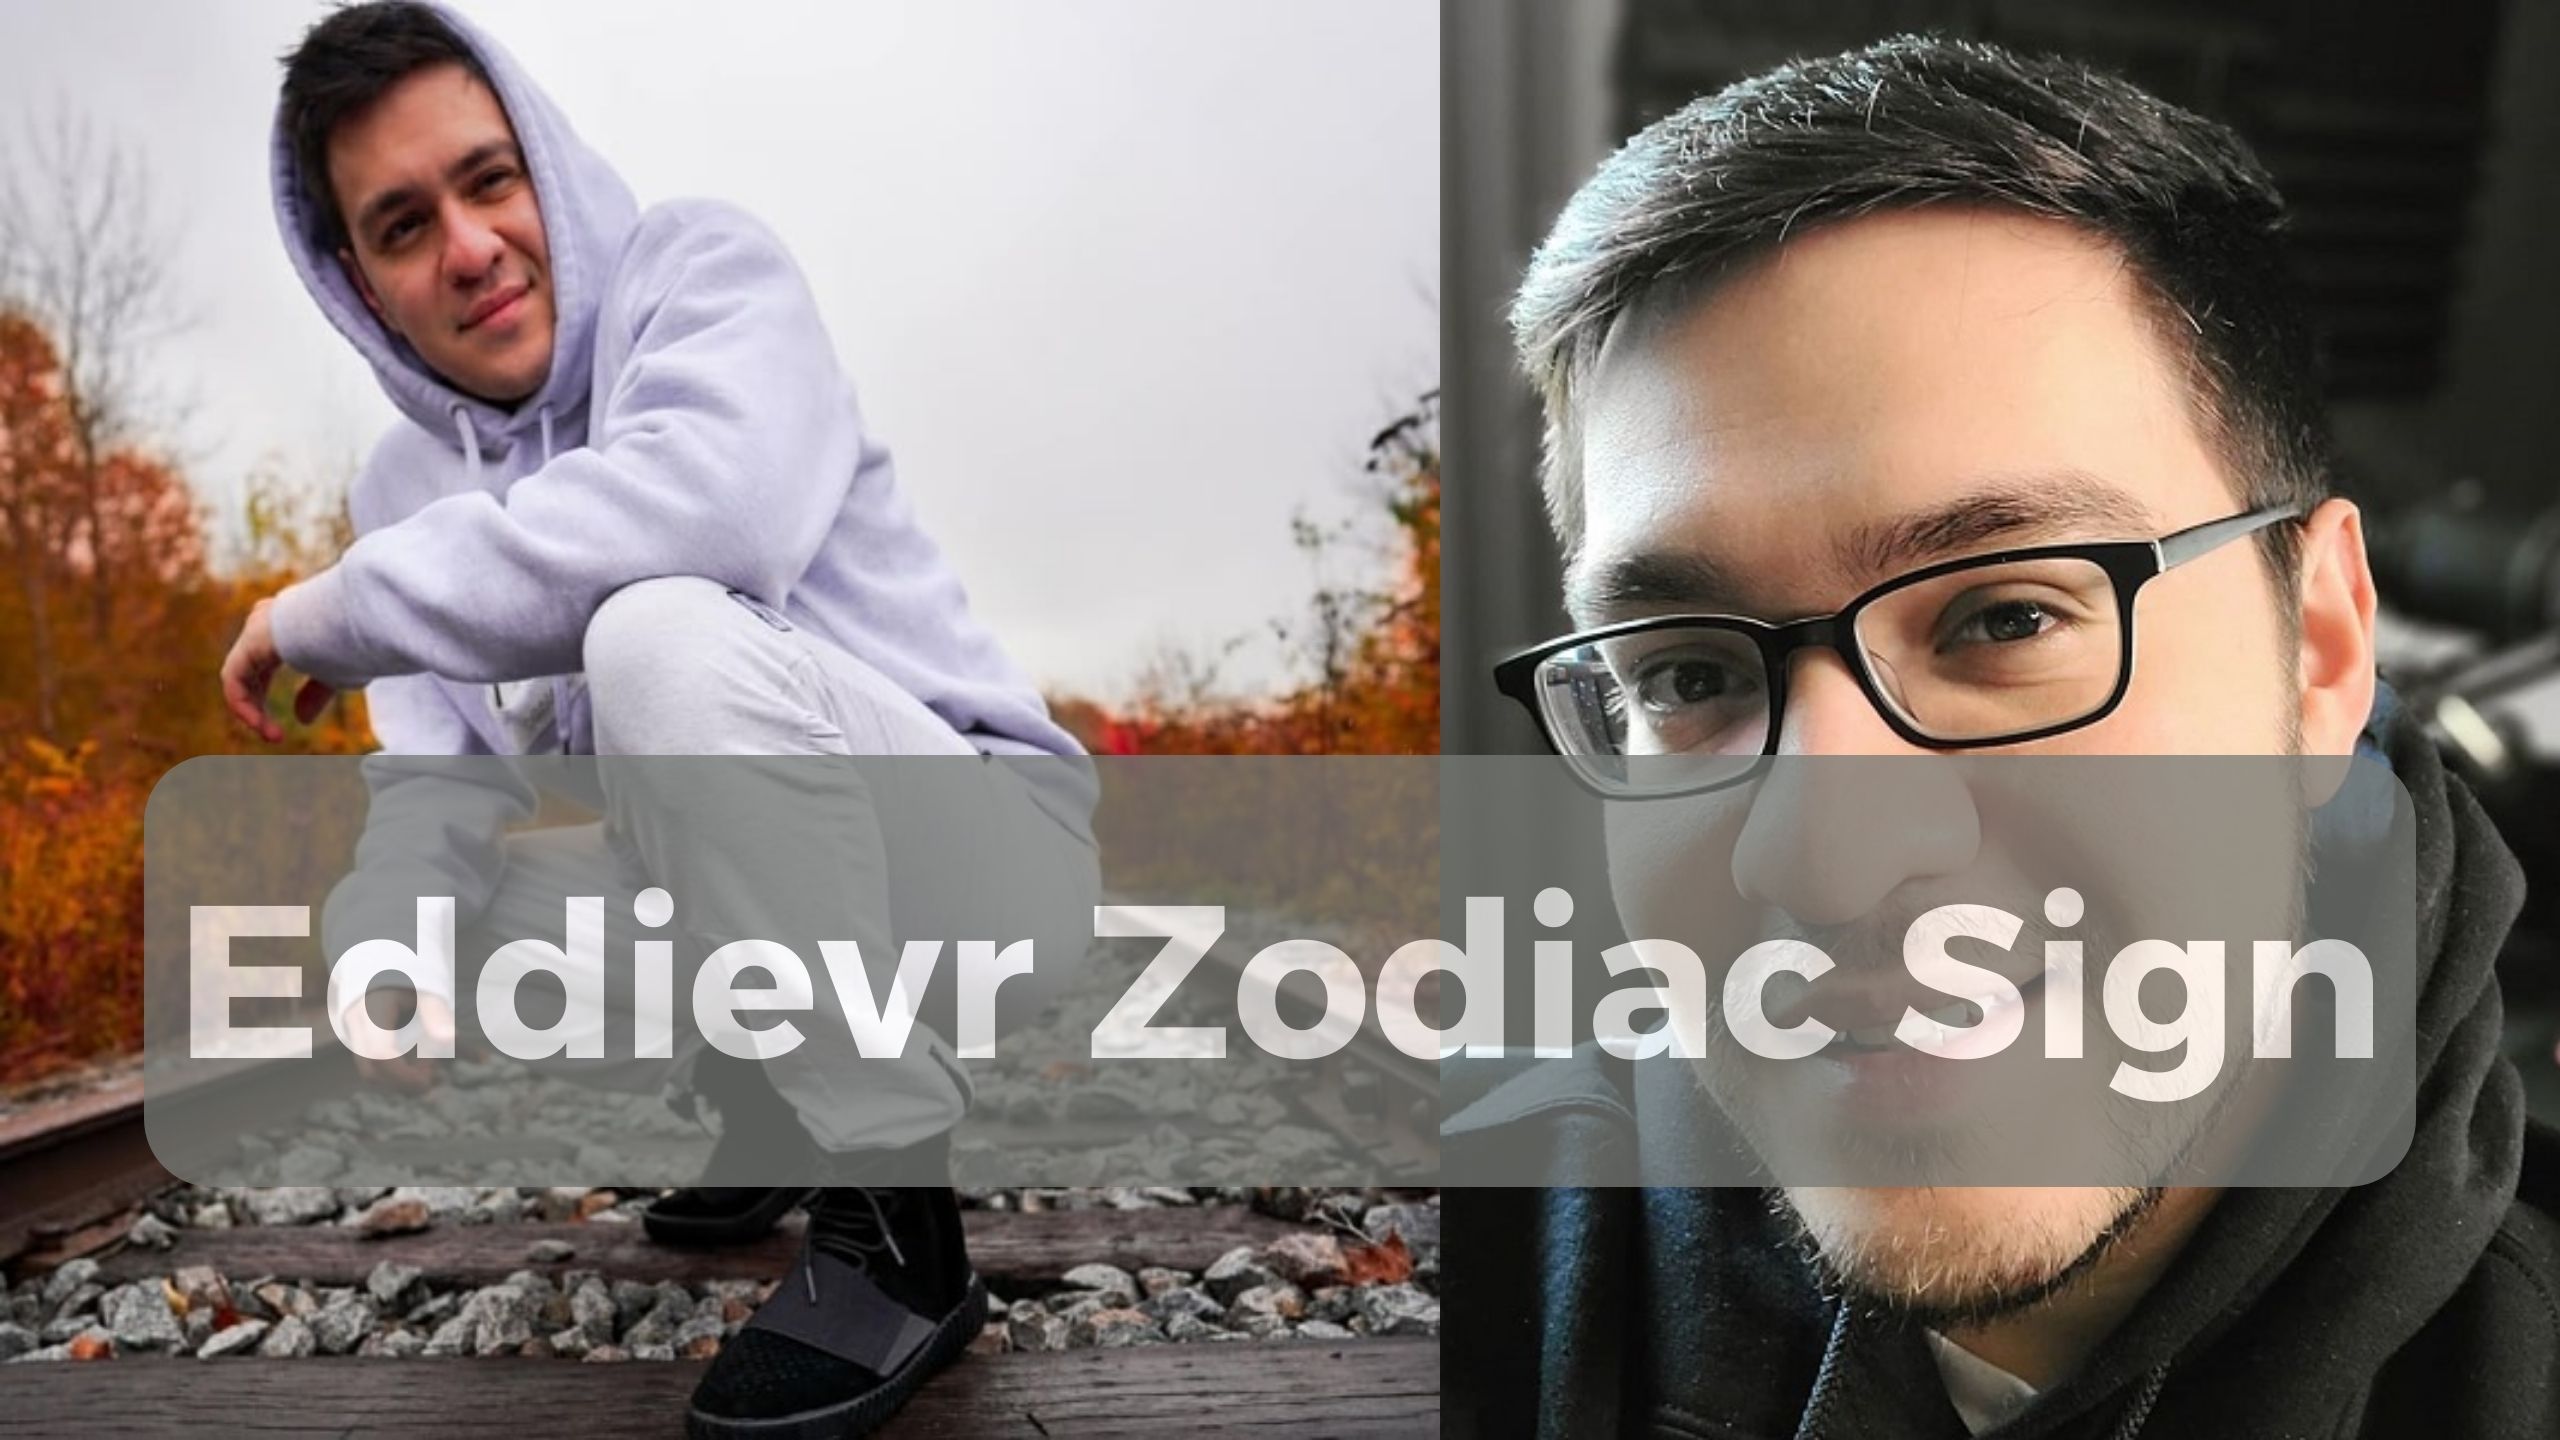 what is eddievr zodiac sign